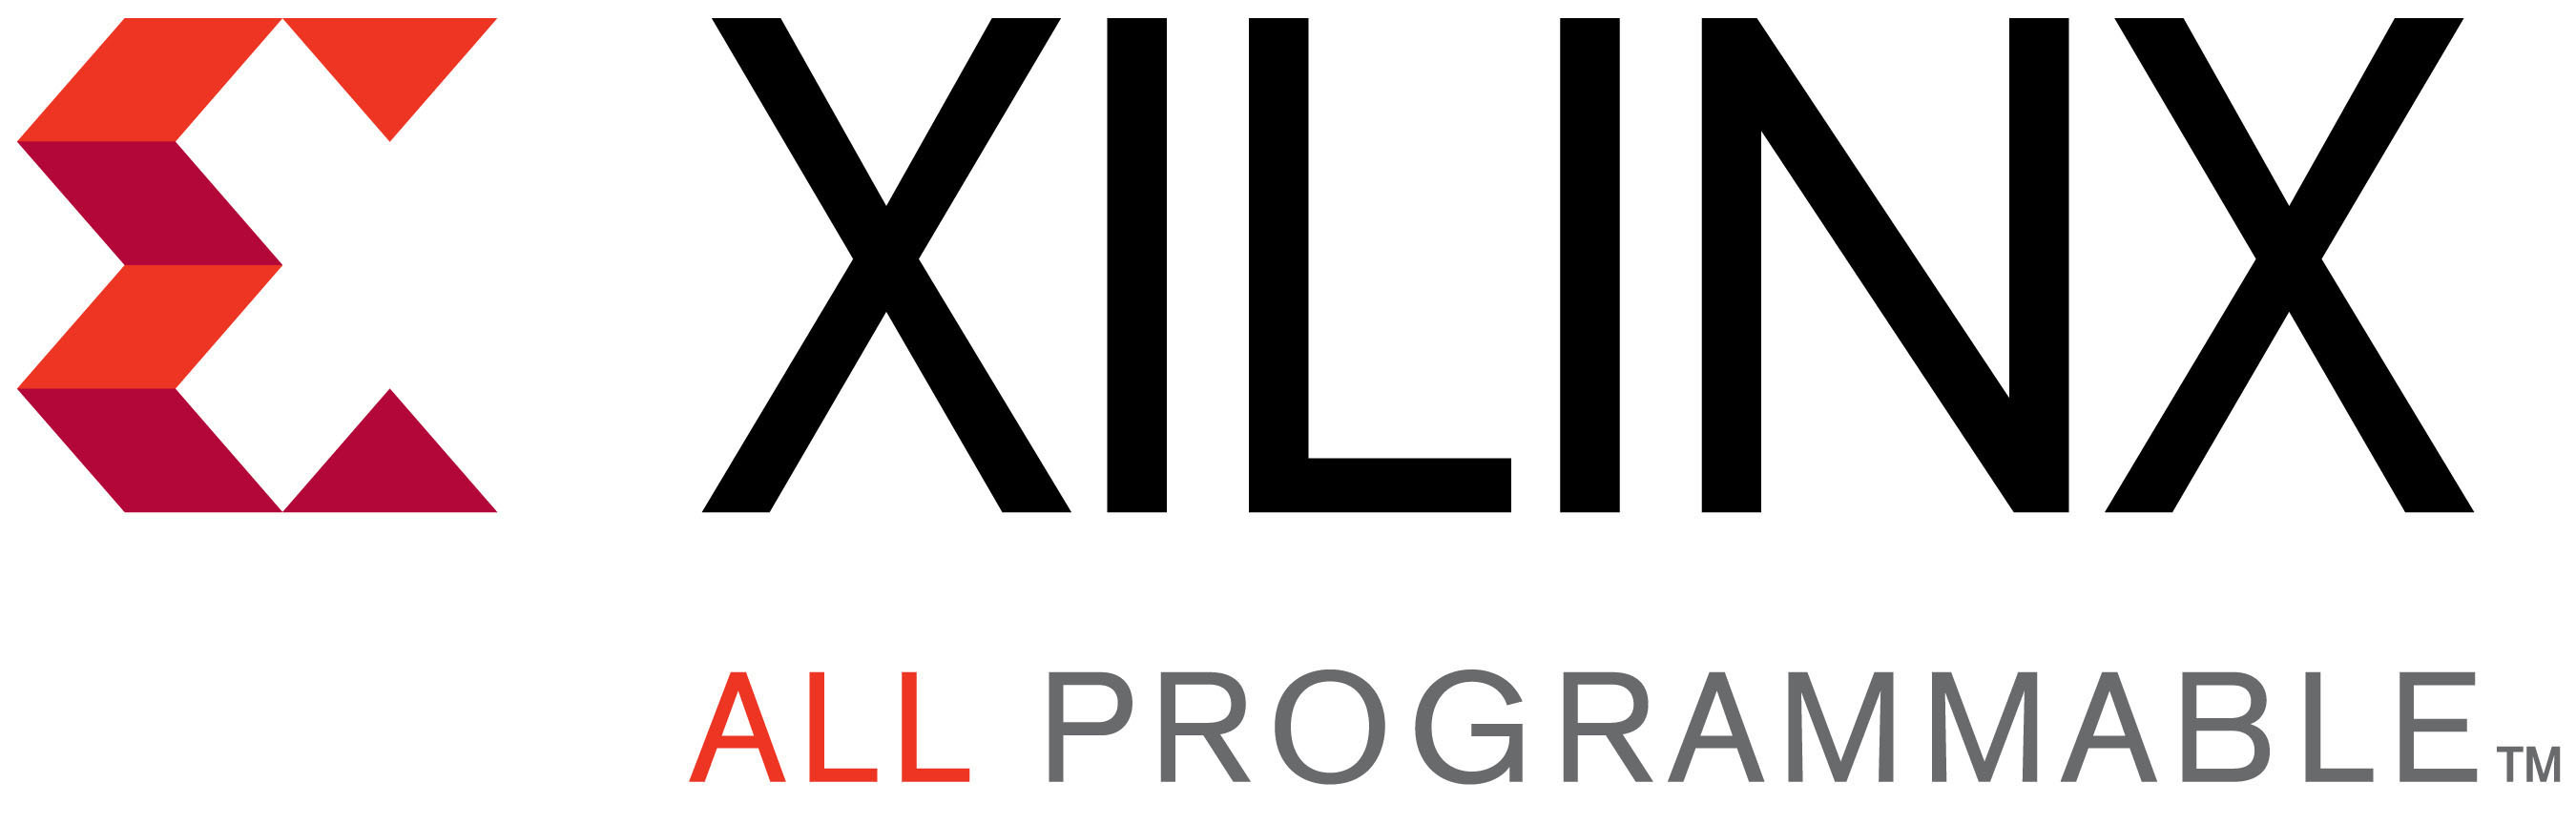 Xilinx is the worldwide leader of programmable logic solutions. (PRNewsFoto/Xilinx) (PRNewsFoto/)